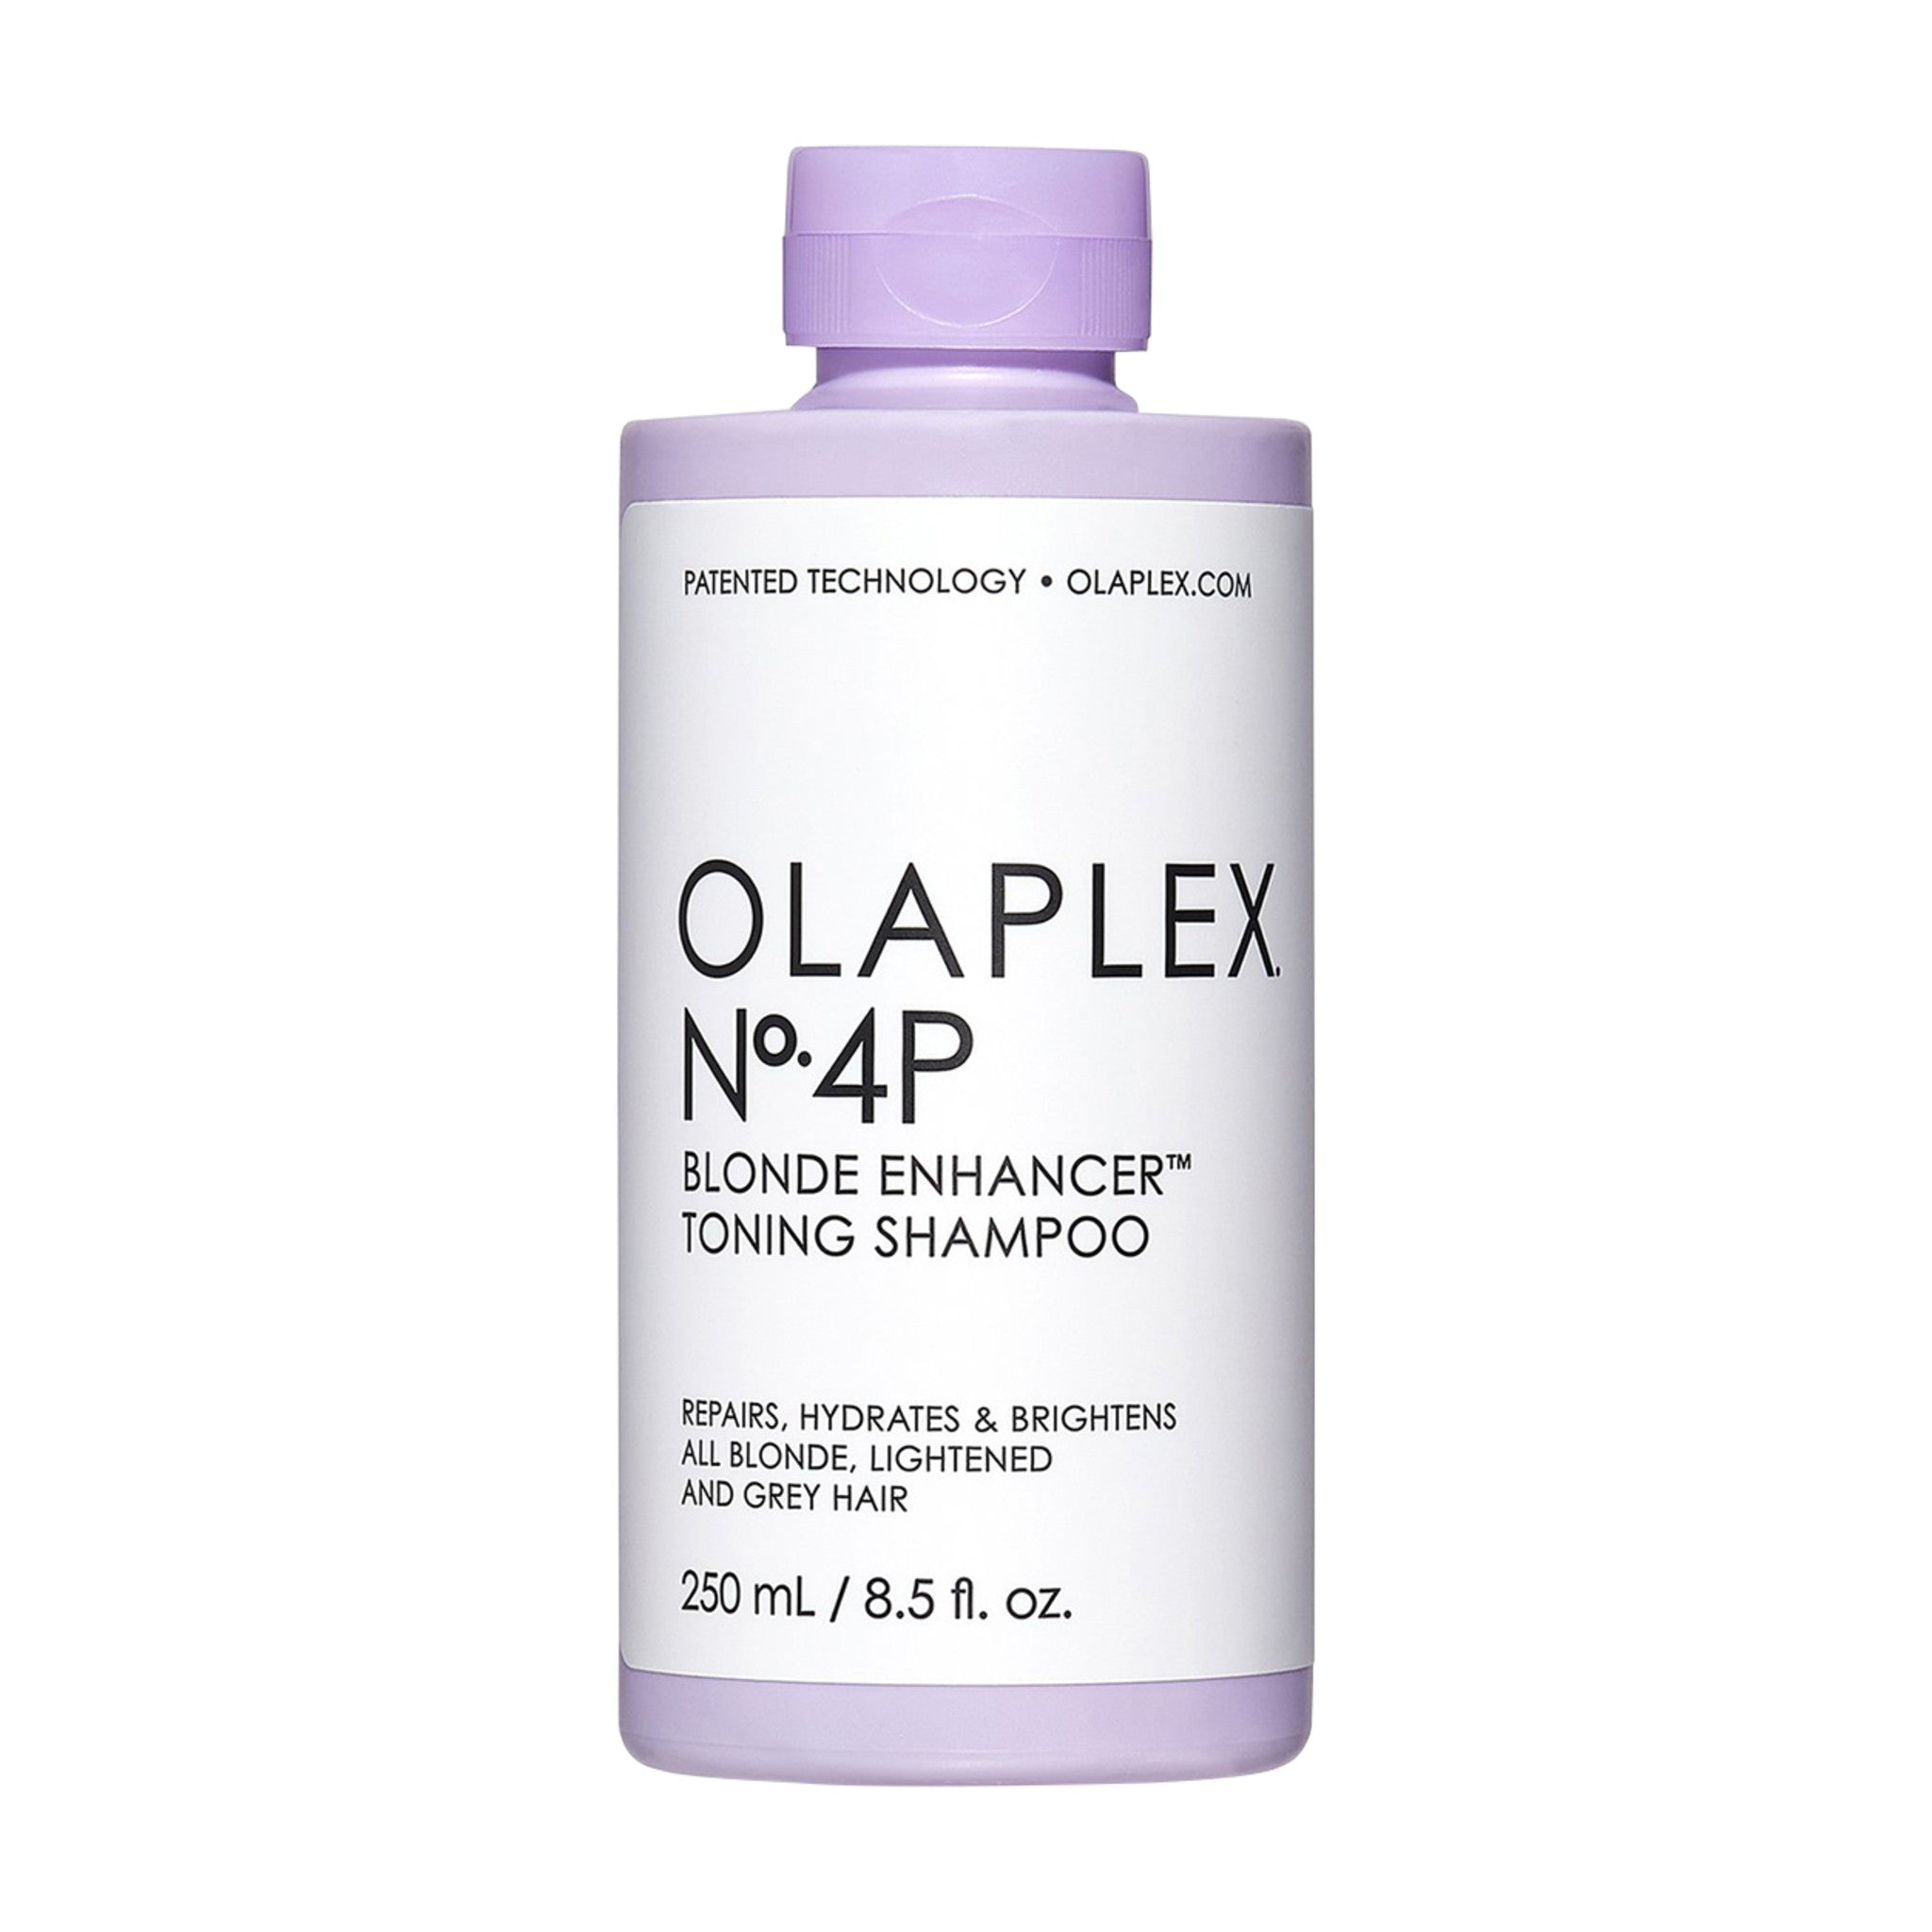 Olaplex Blonde Enhancer Toning Shampoo –